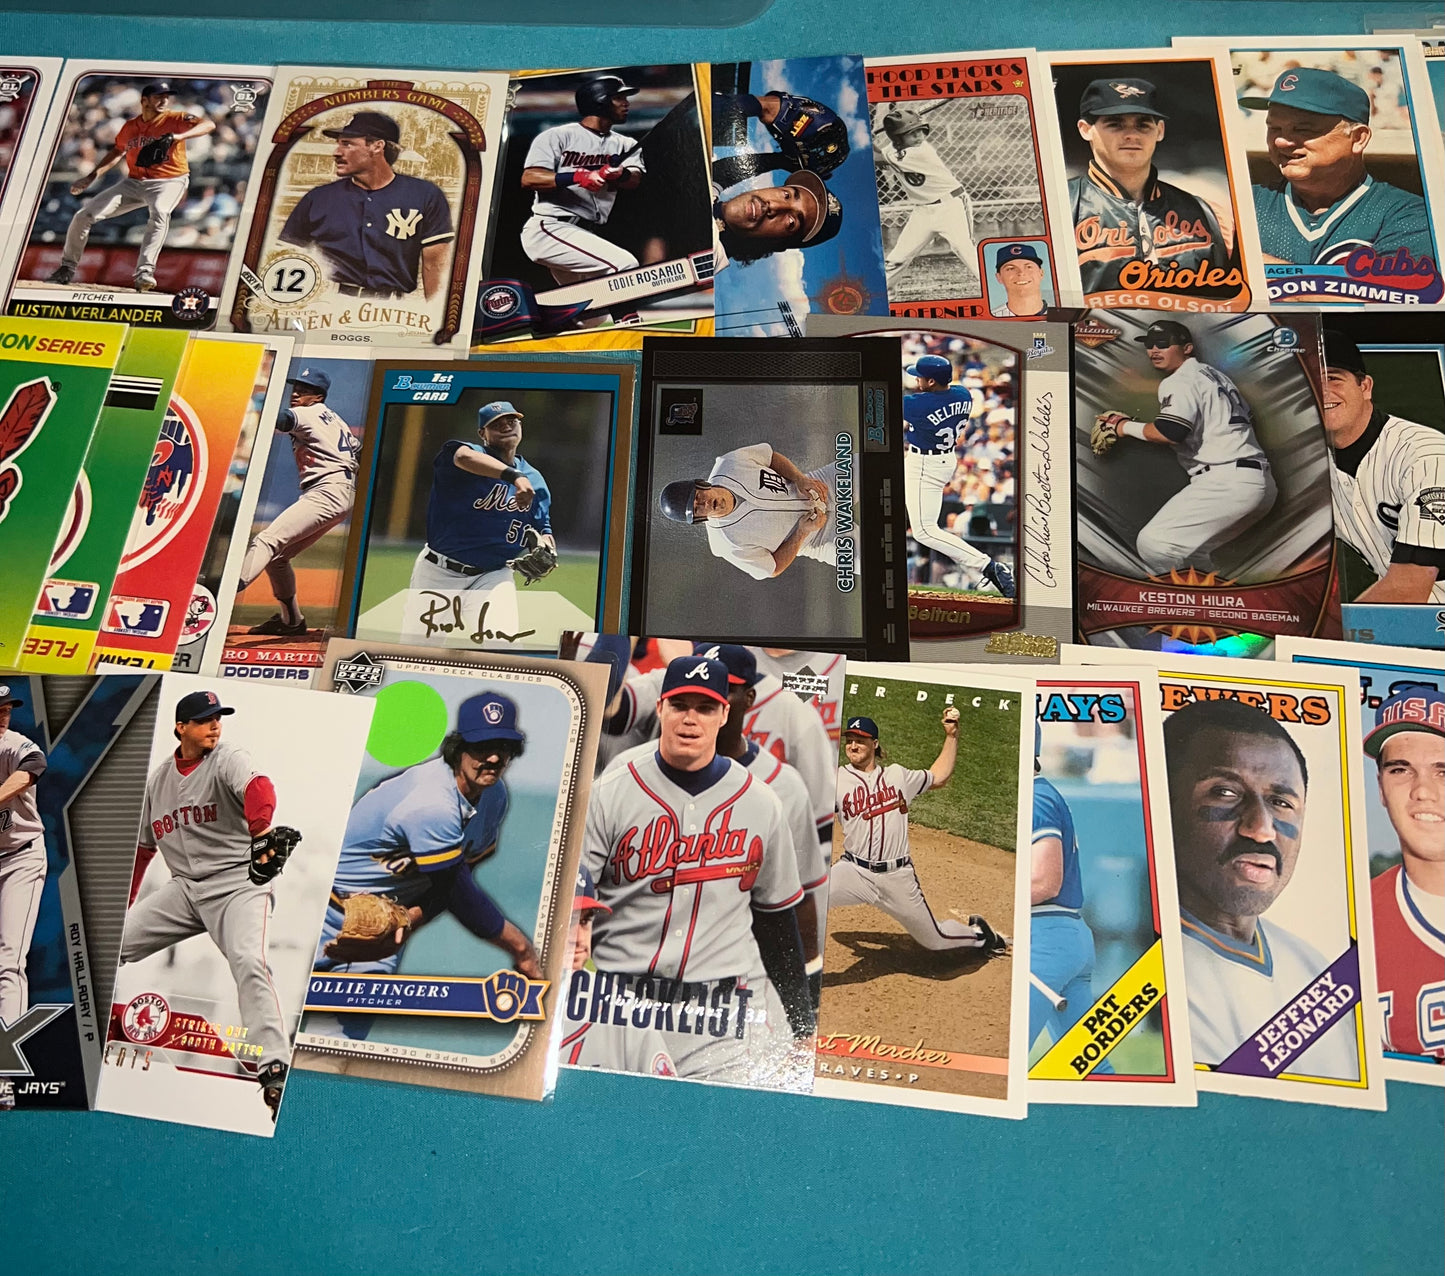 Baseball Card Lot Huge Collection 600 Plus MLB Modern to Vintage / Toploaders